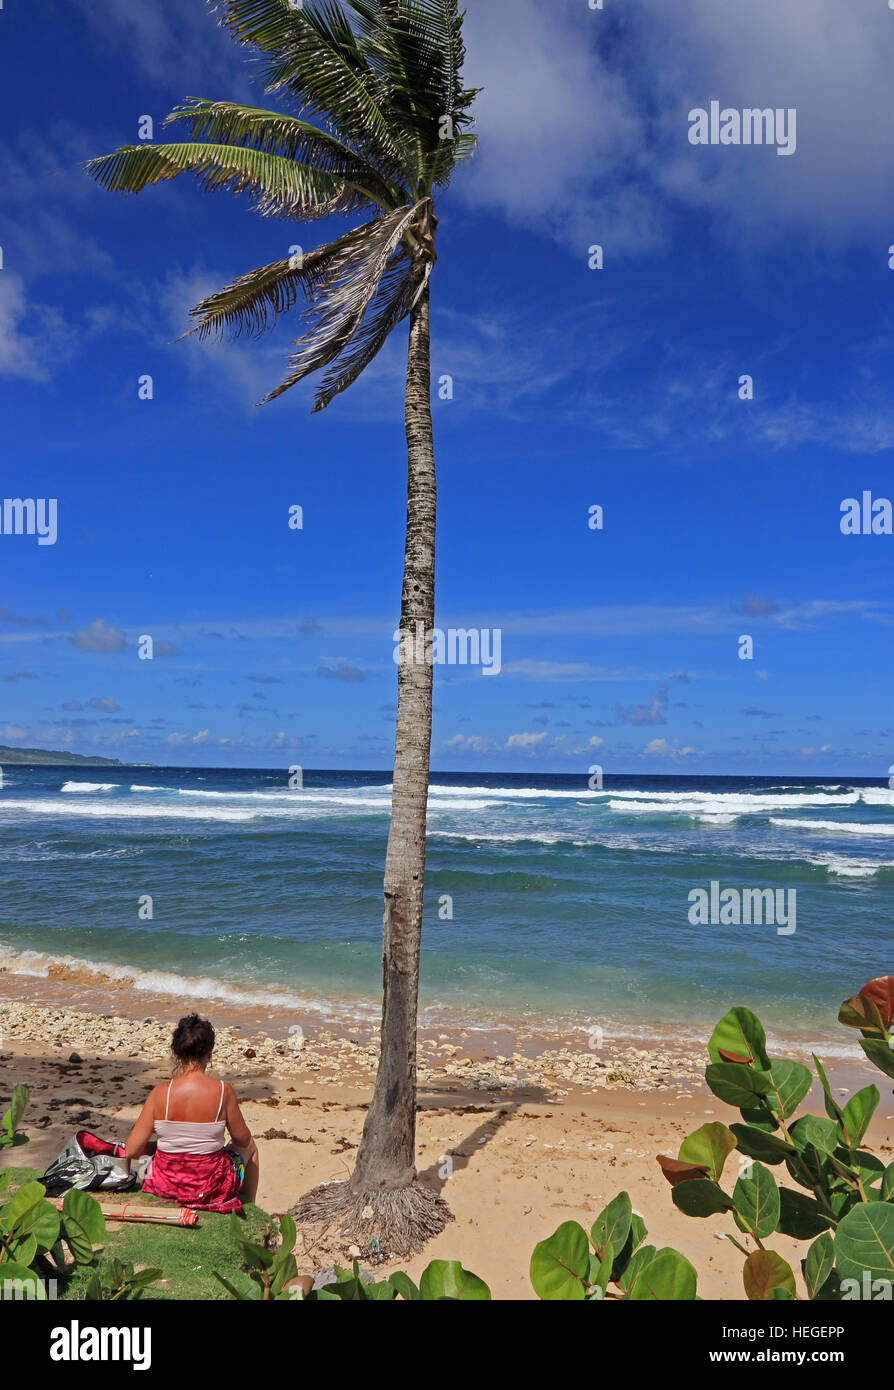 Woman sat under palm tree on beach, Bathsheba, Barbados Stock Photo